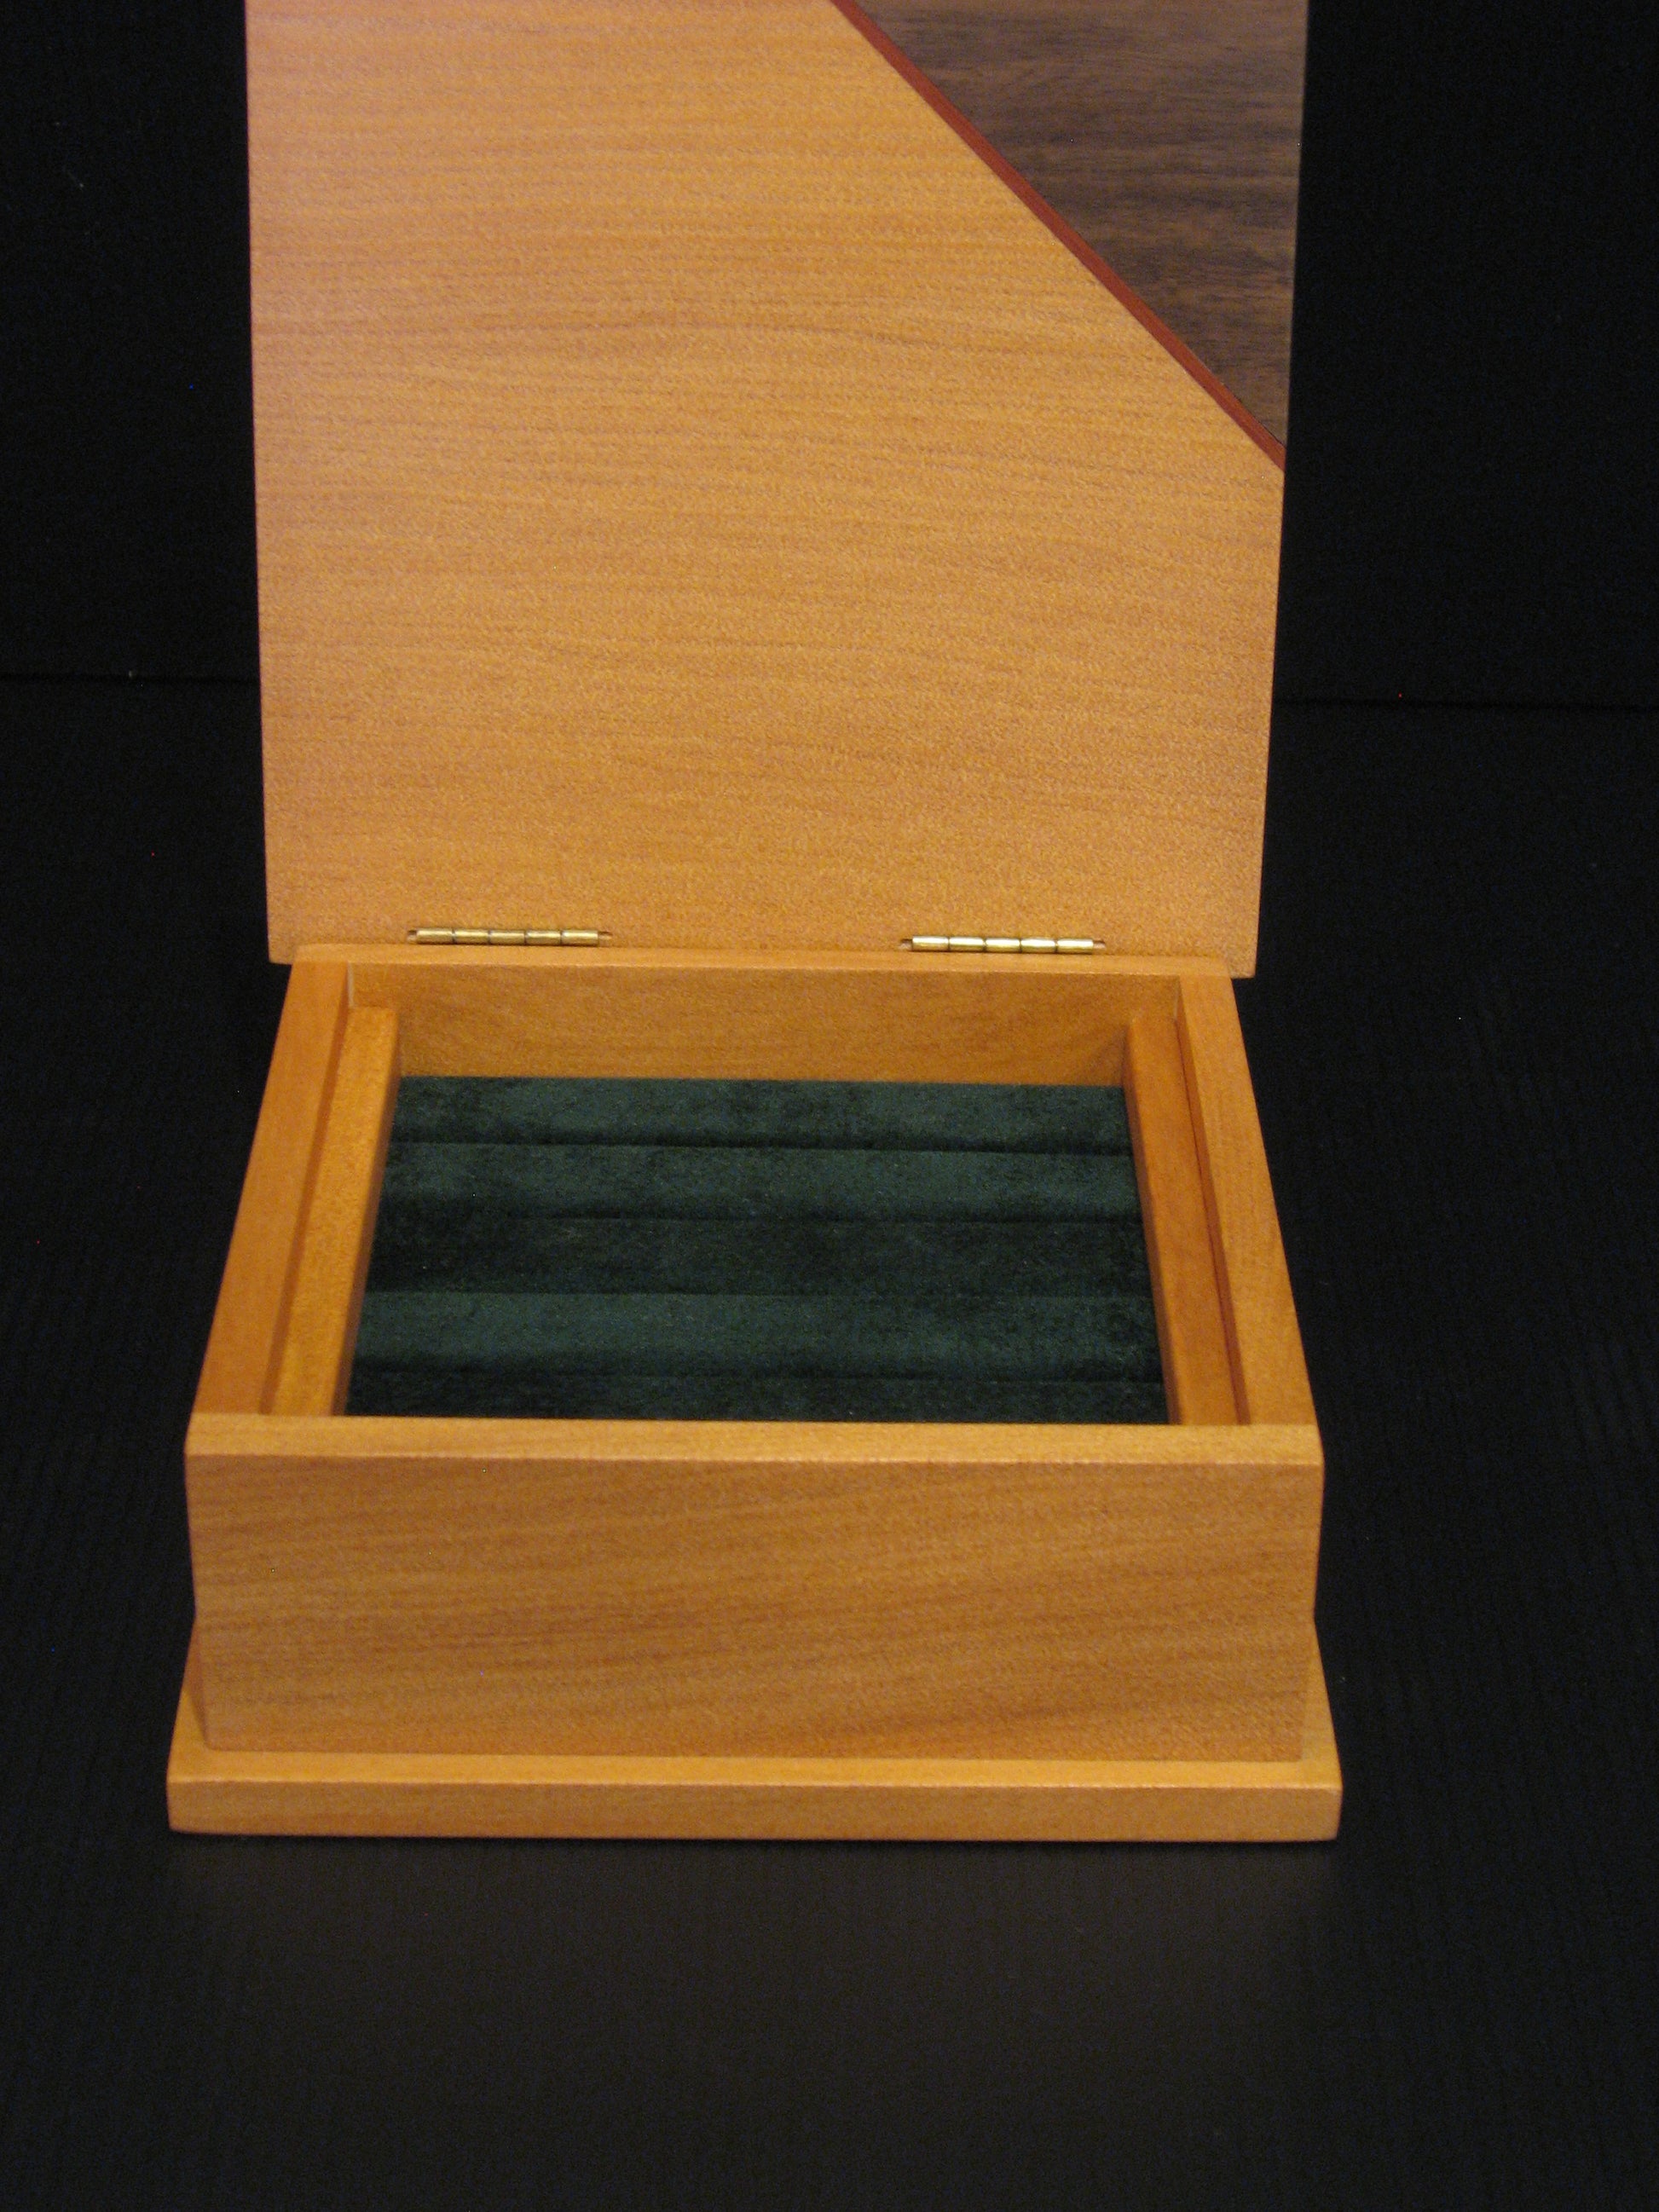 Inside of Wooden Cufflink or Earring Box by Timber Arts Silver Fern Gallery